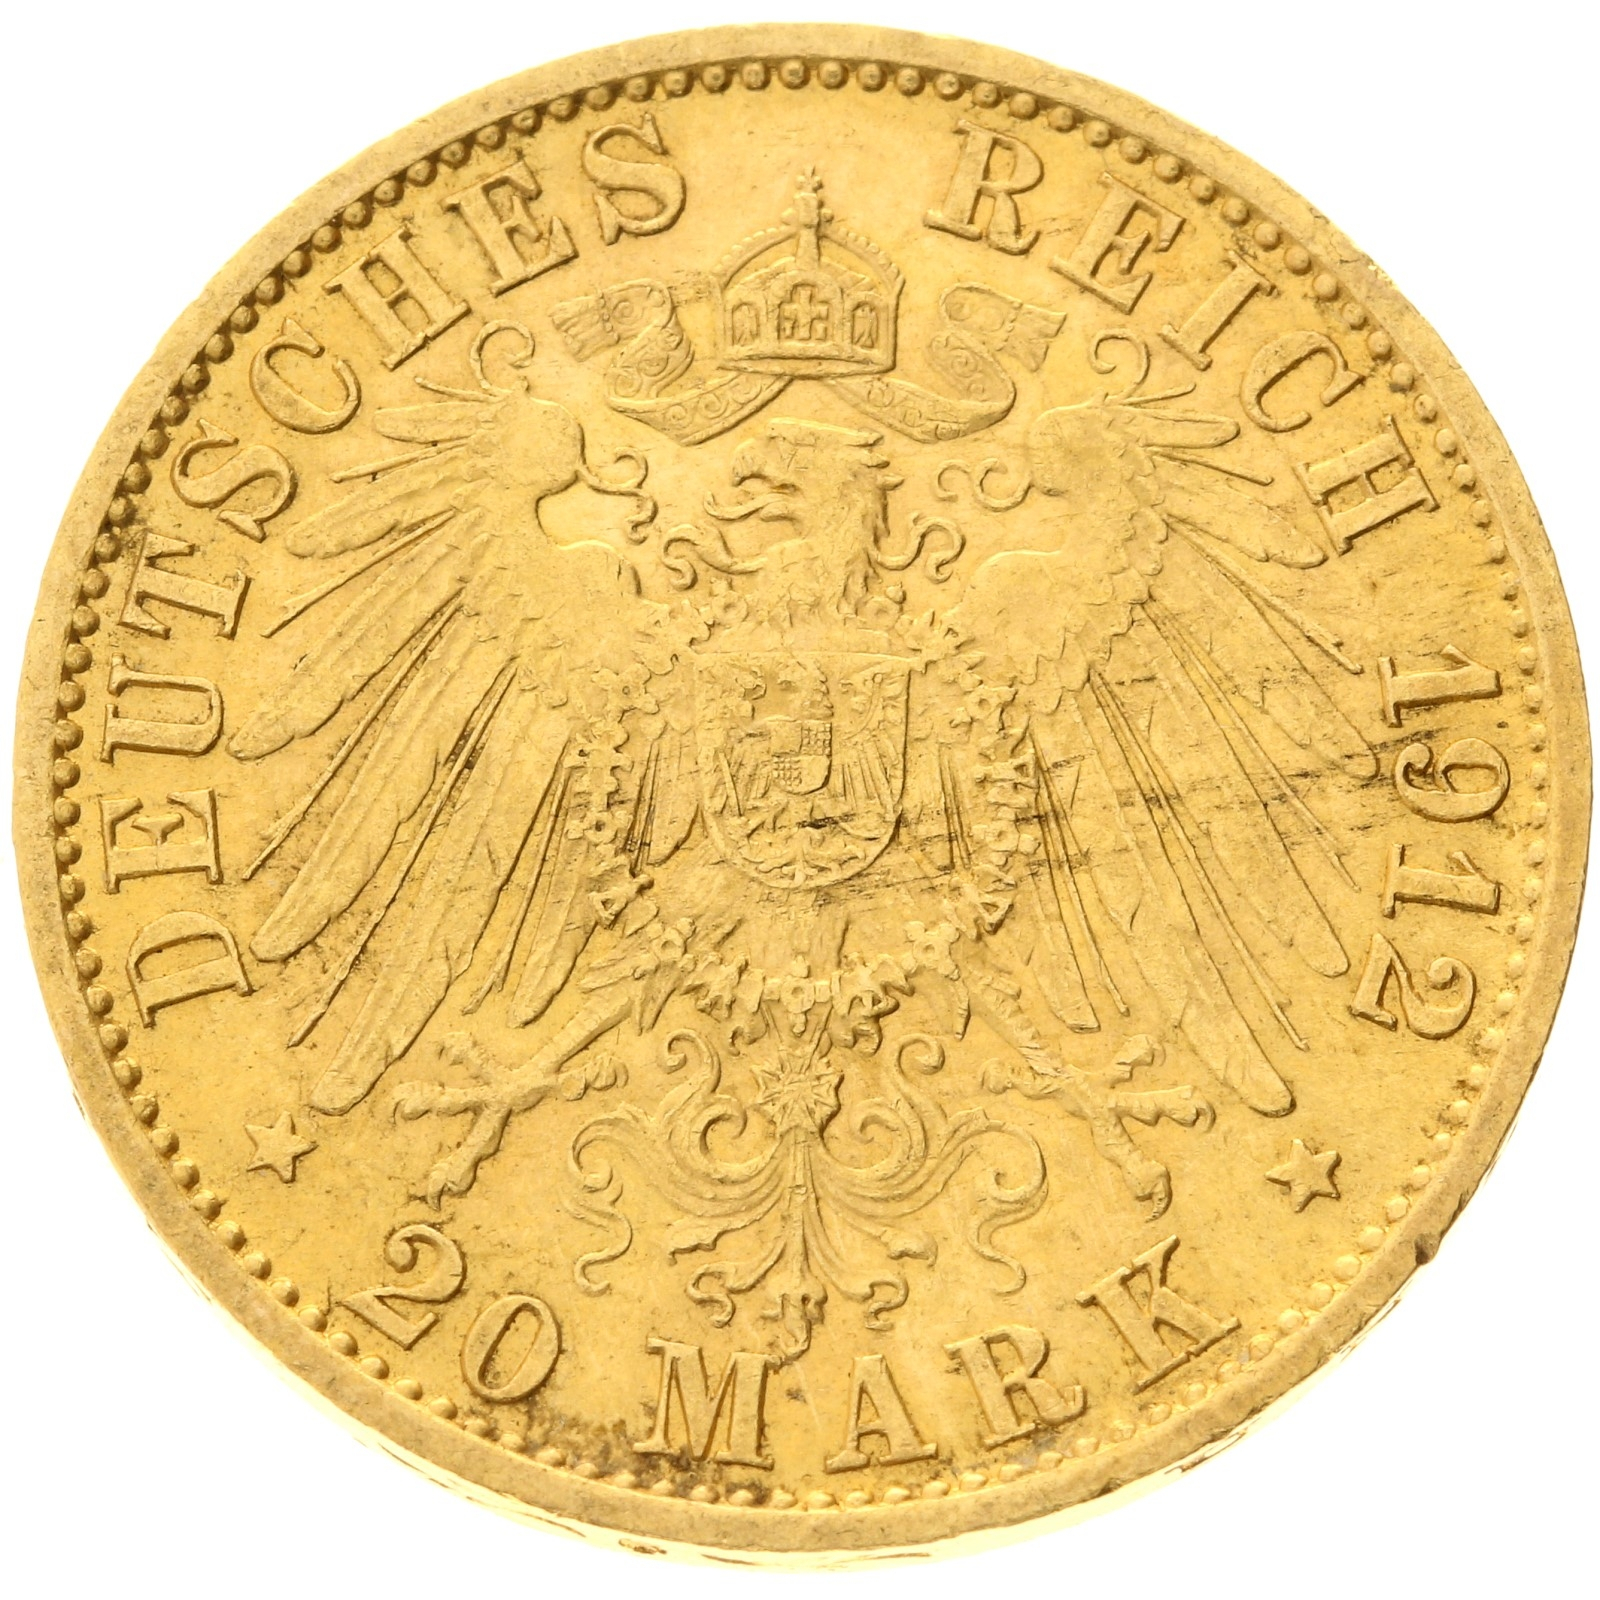 Germany - Prussia - 20 mark - 1912 - A - Wilhelm II 